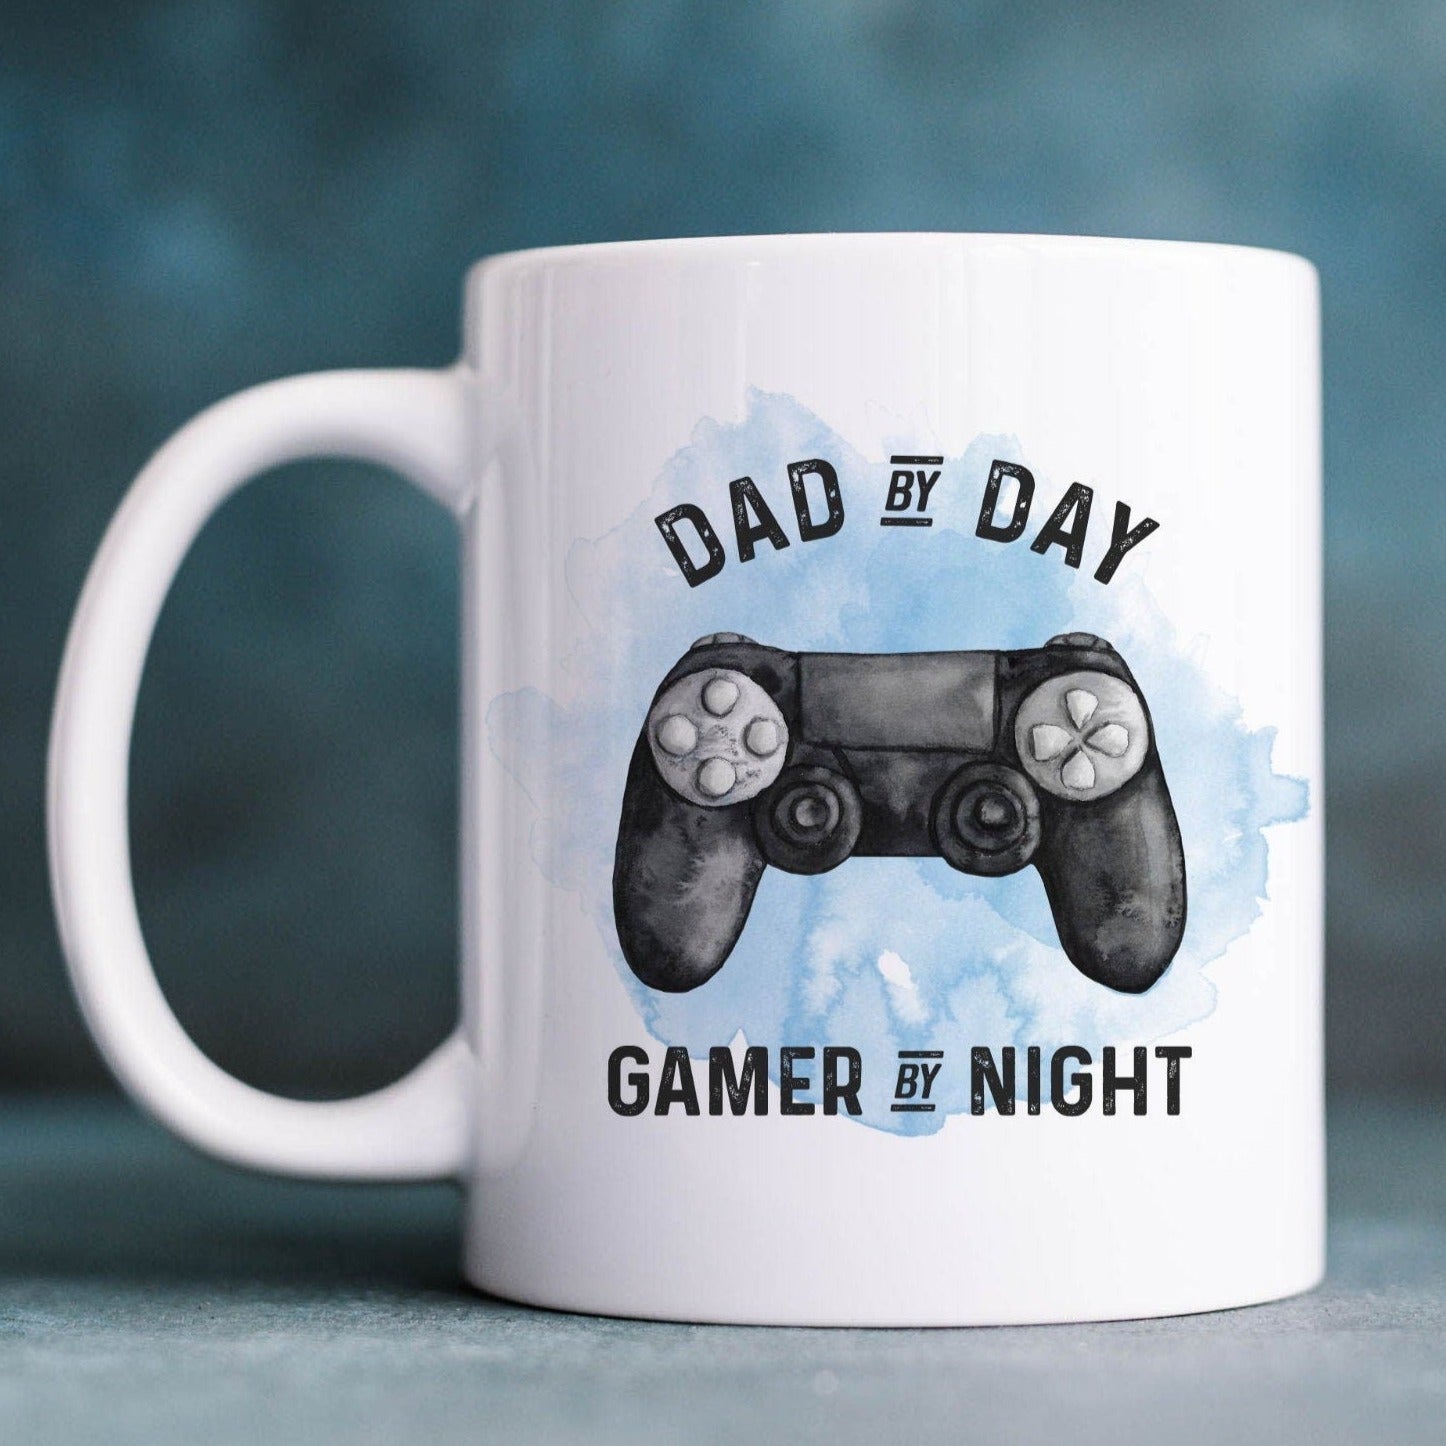 Dad by day, gamer by night mug in blue